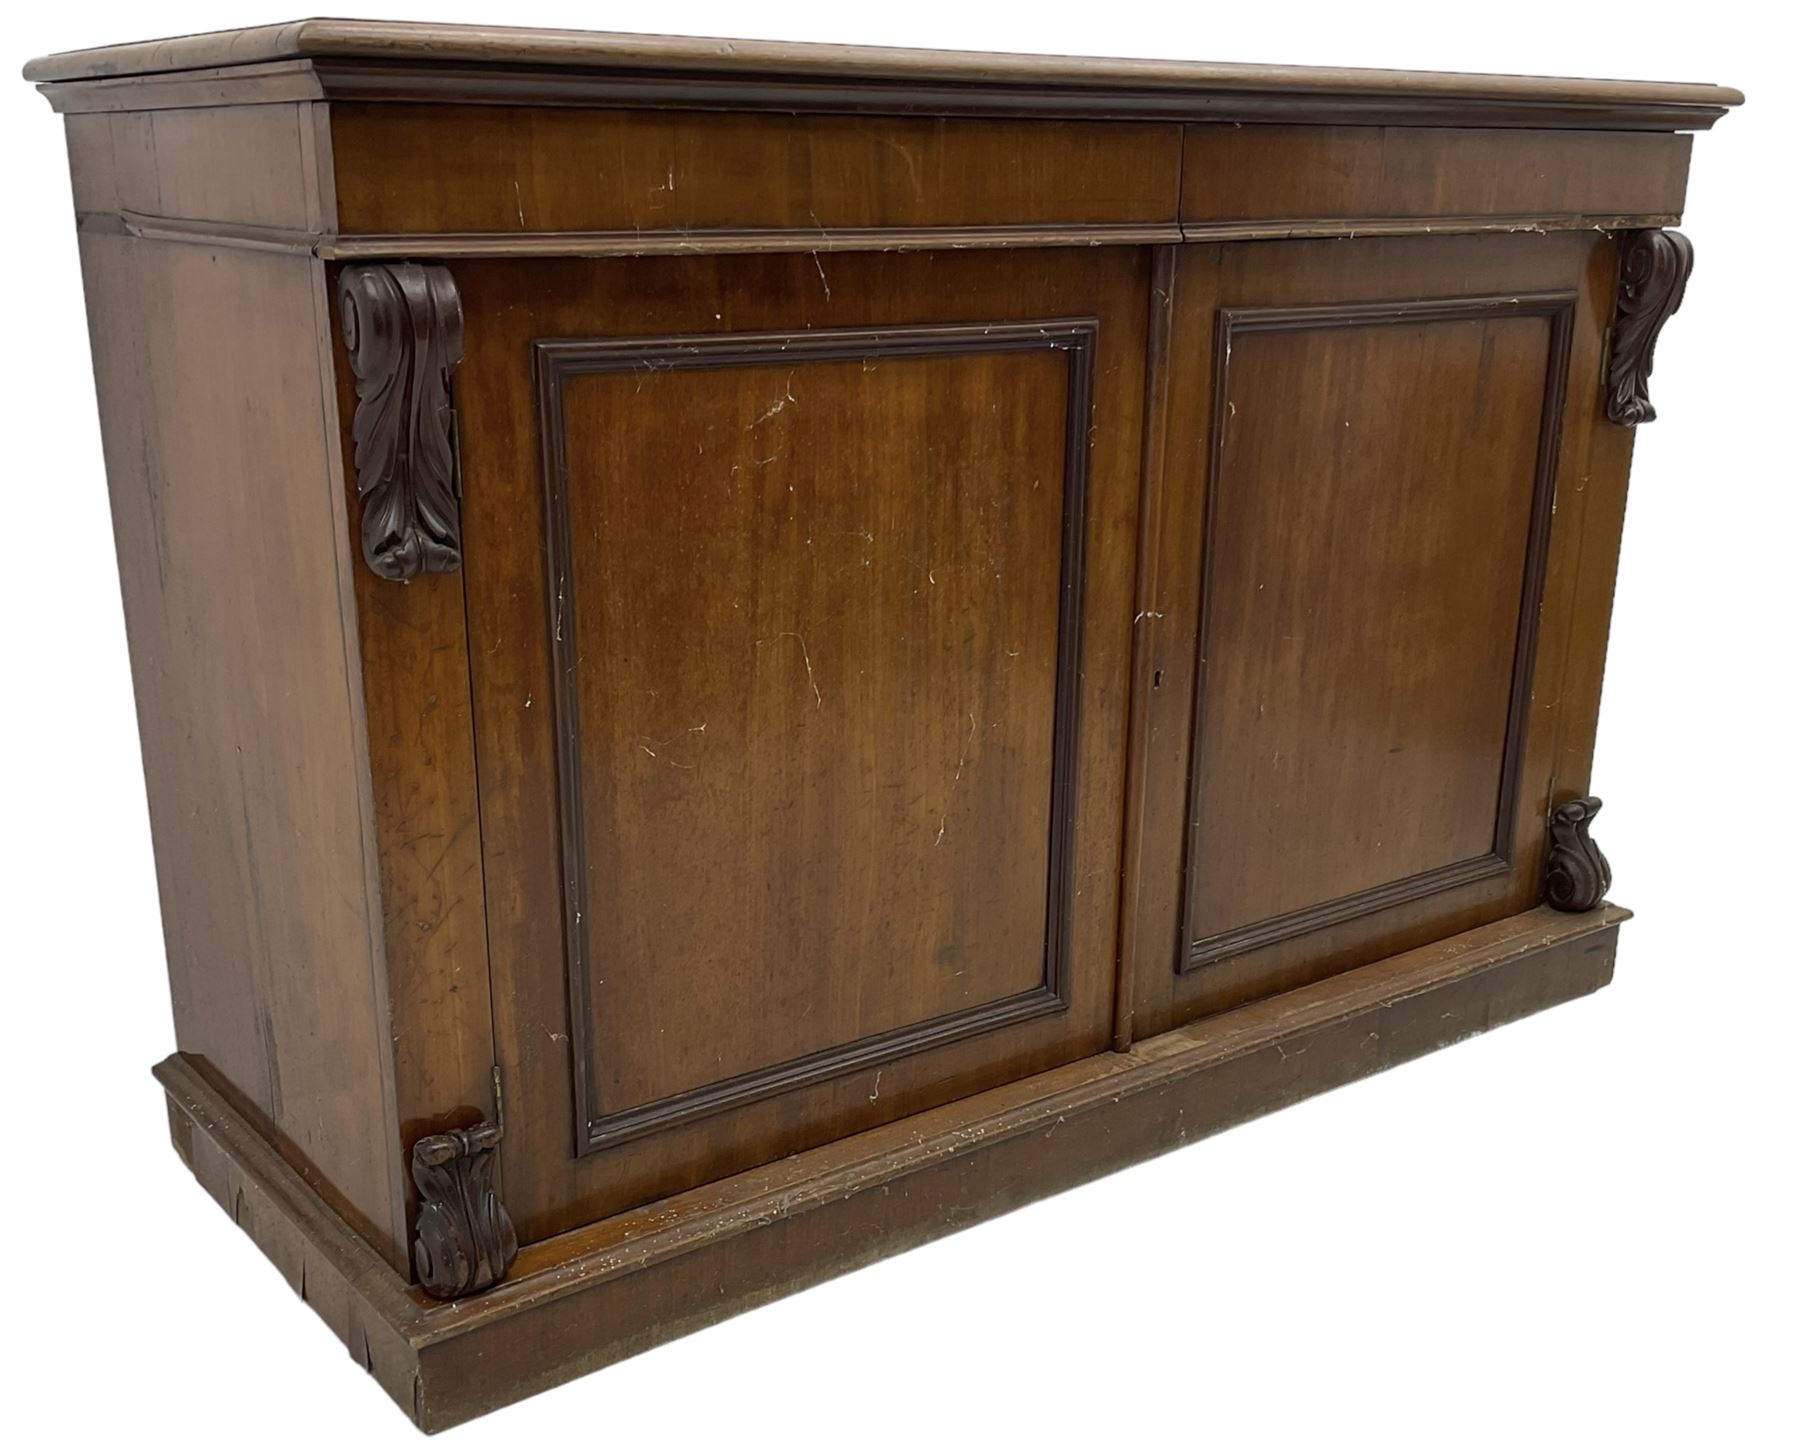 Early 19th century mahogany chiffonier sideboard - Image 6 of 9